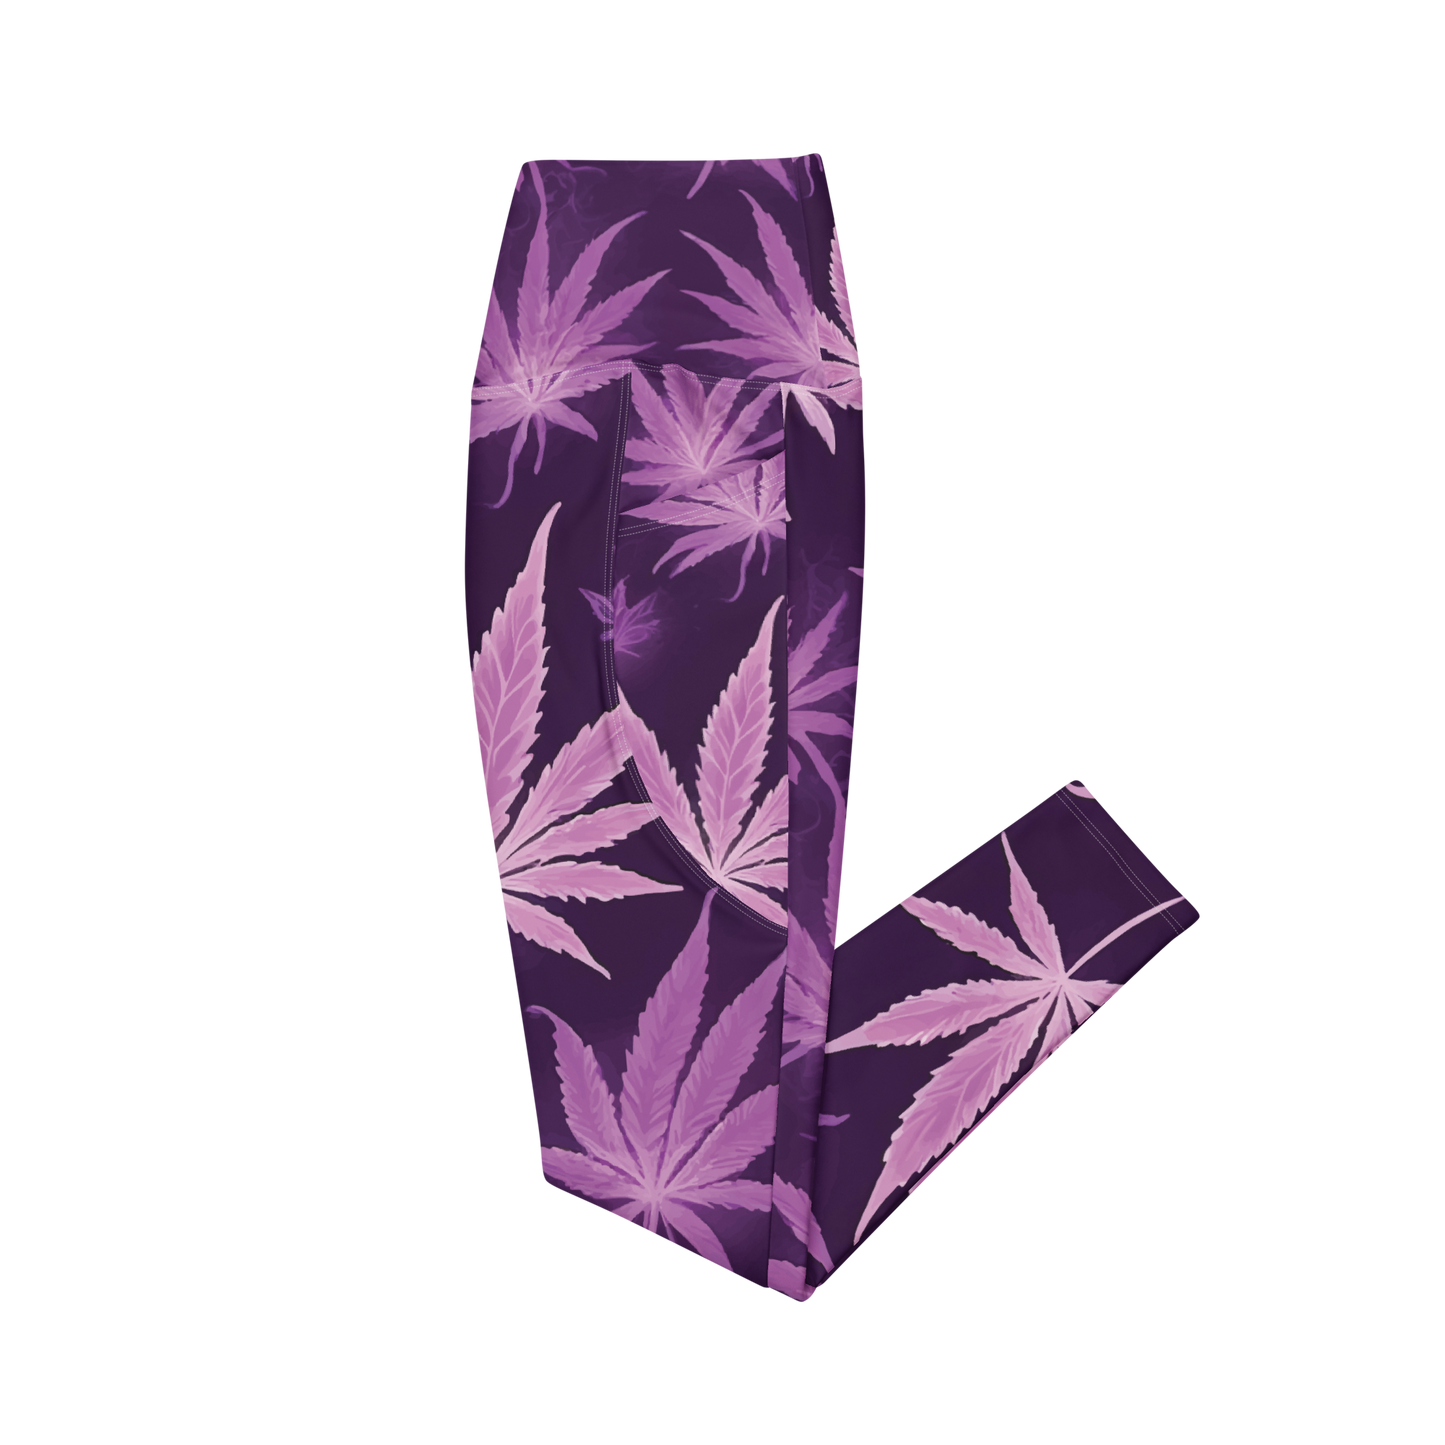 420 Sub Noize Leaf Leggings (Purple / Pink)